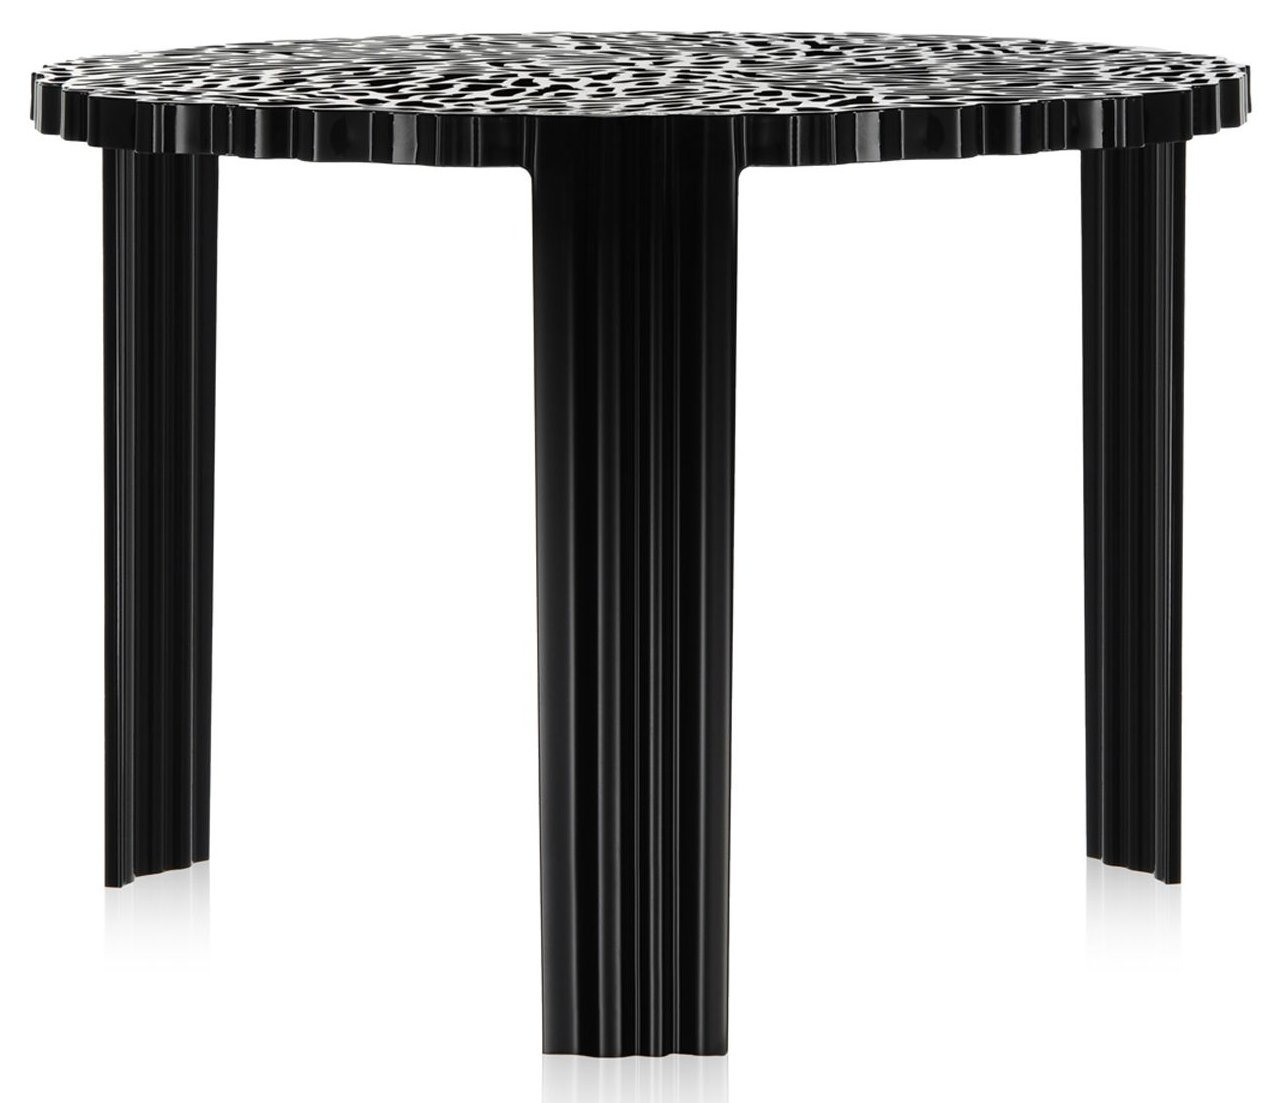 Masuta Kartell T-Table design Patricia Urquiola 50cm h 36cm negru Kartell